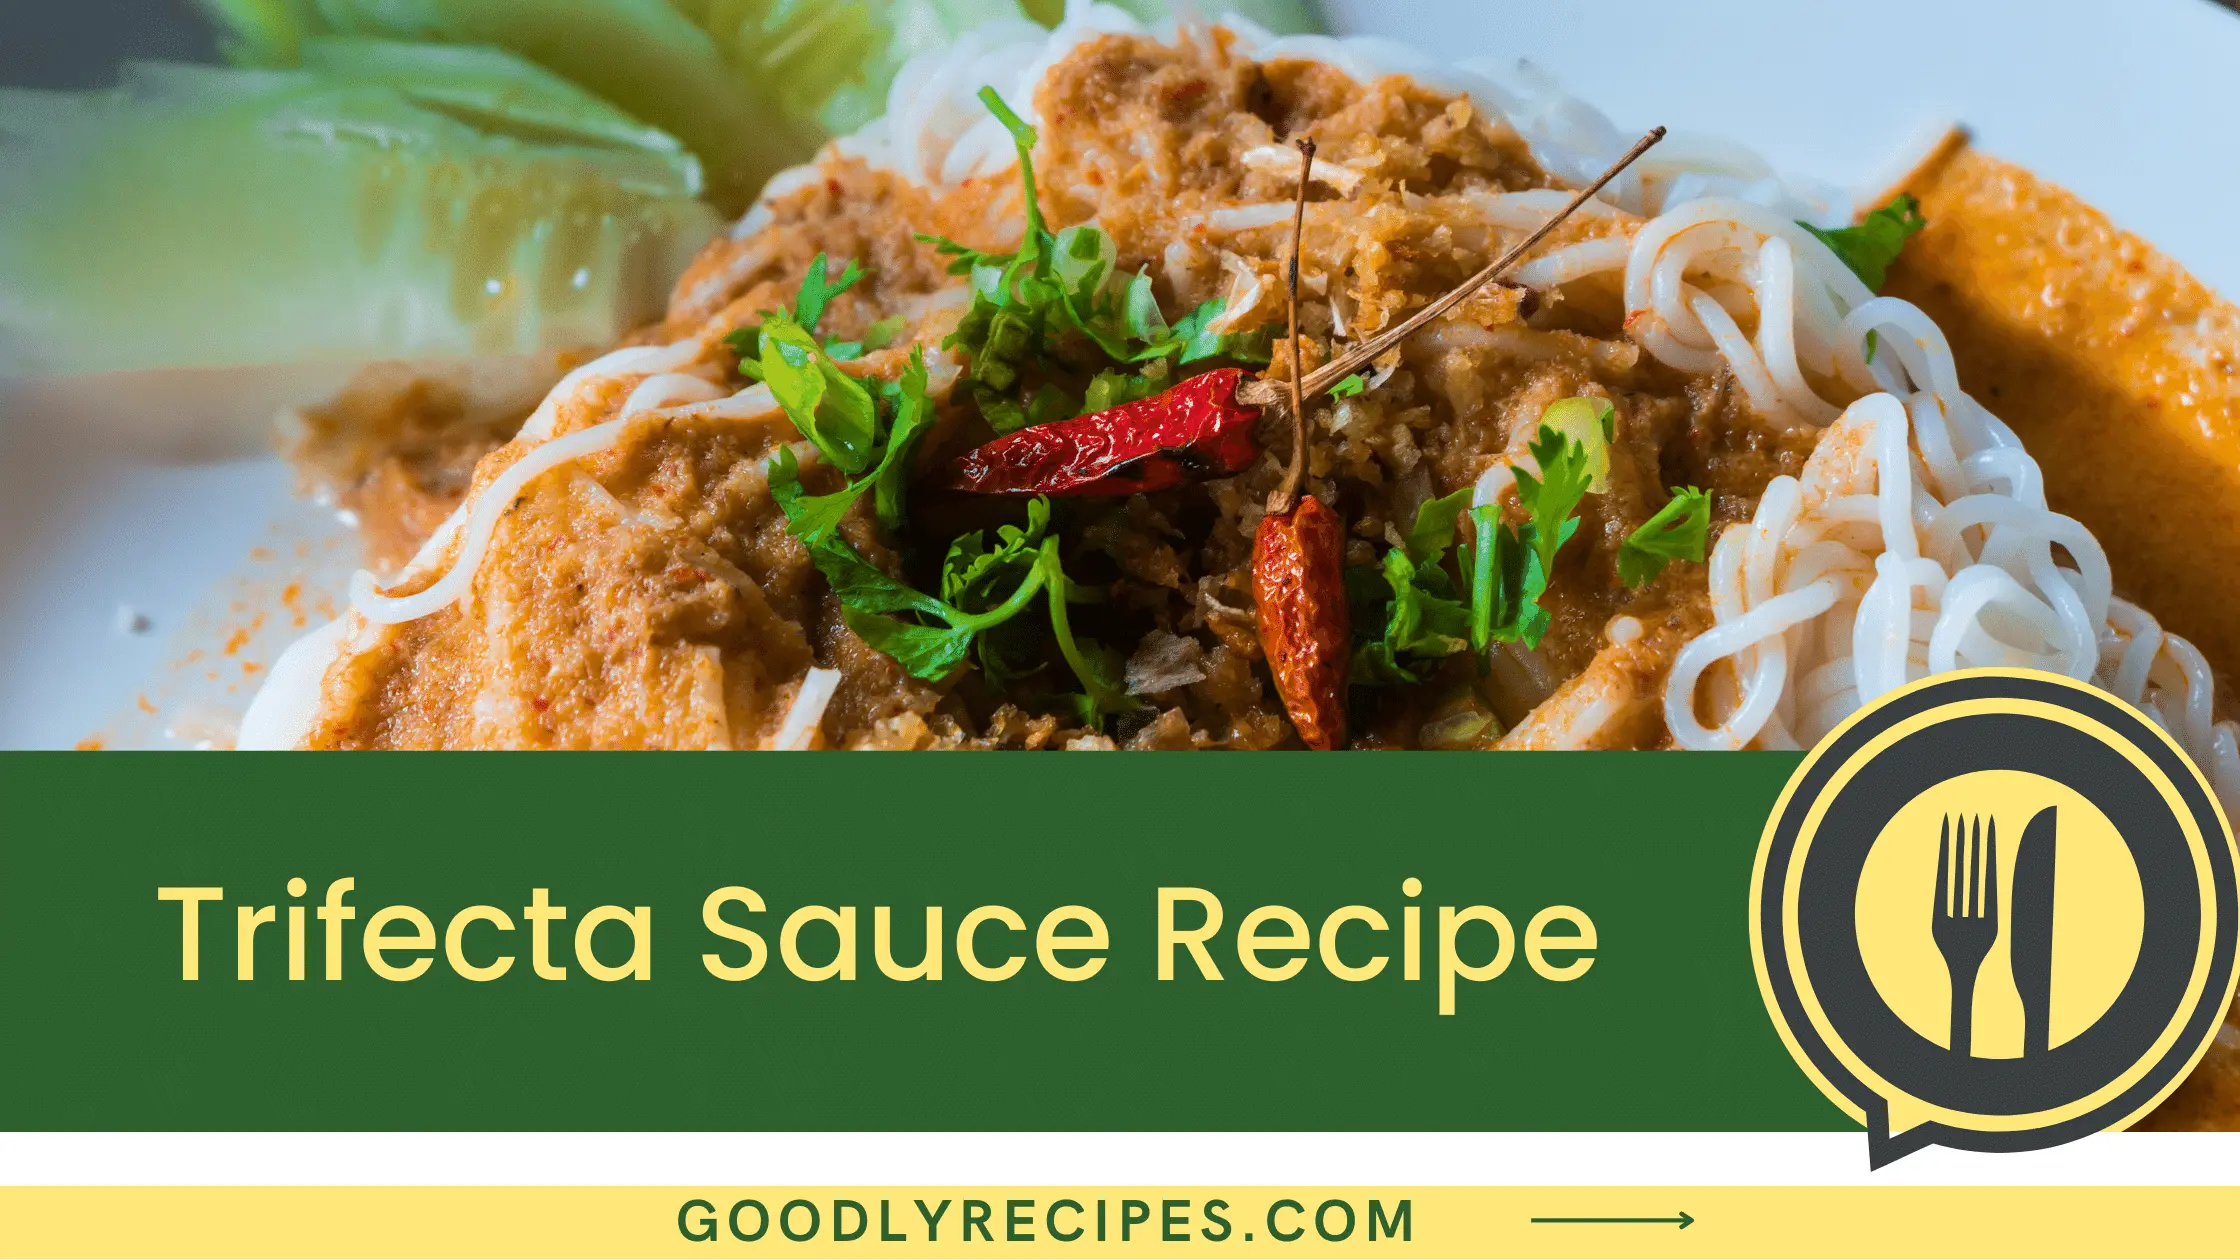 Trifecta Sauce Recipe